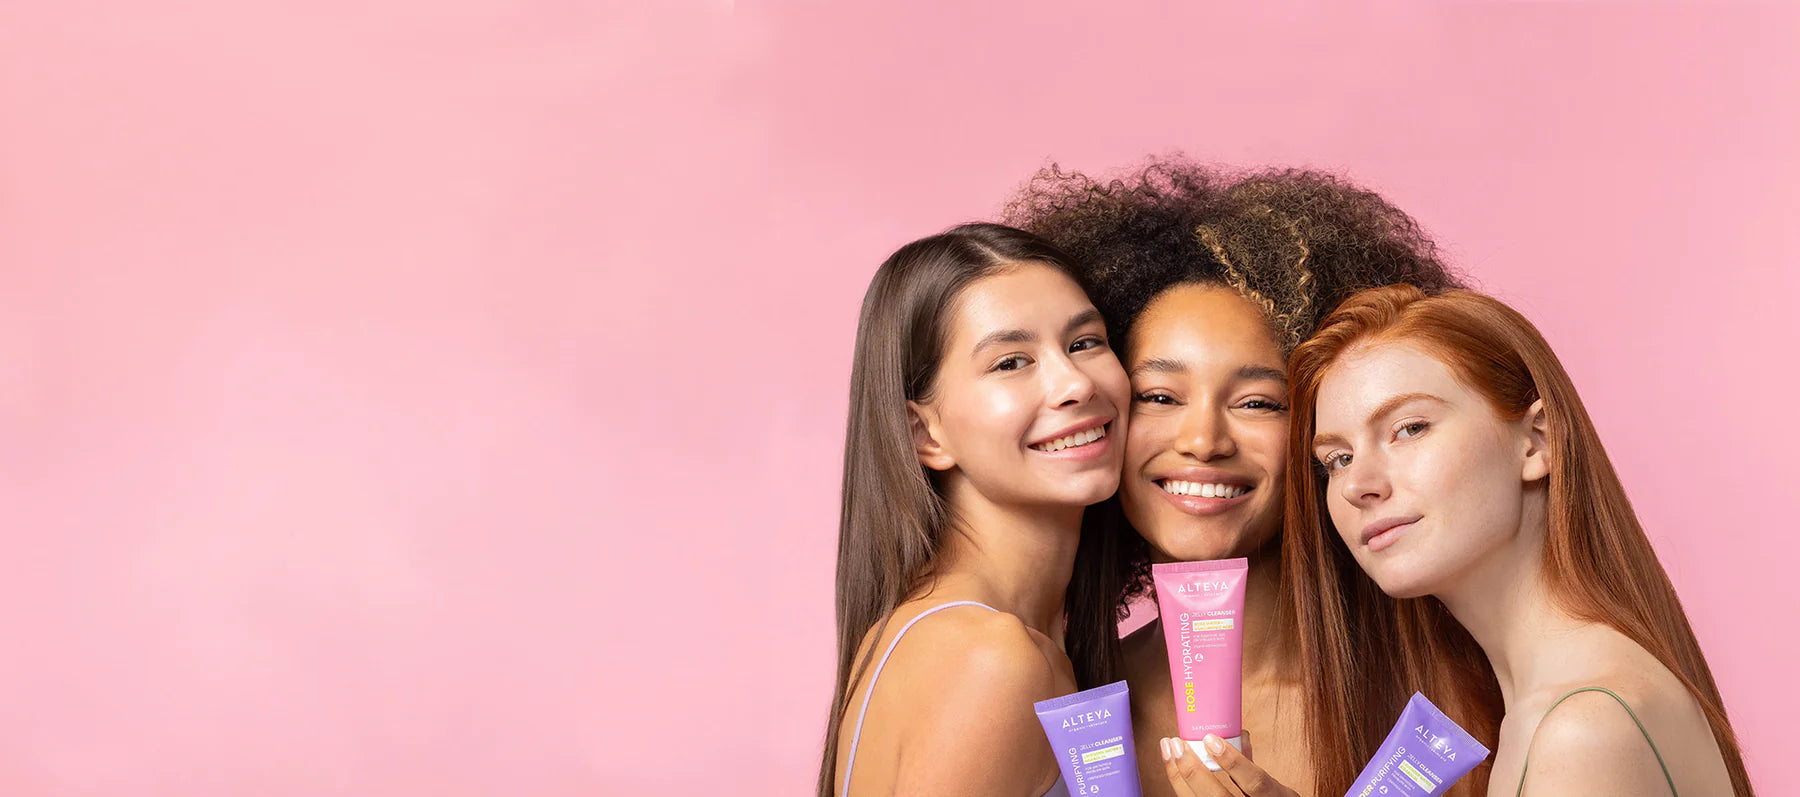 Natural Soap & Skincare - Mountain Girl Essentials ®